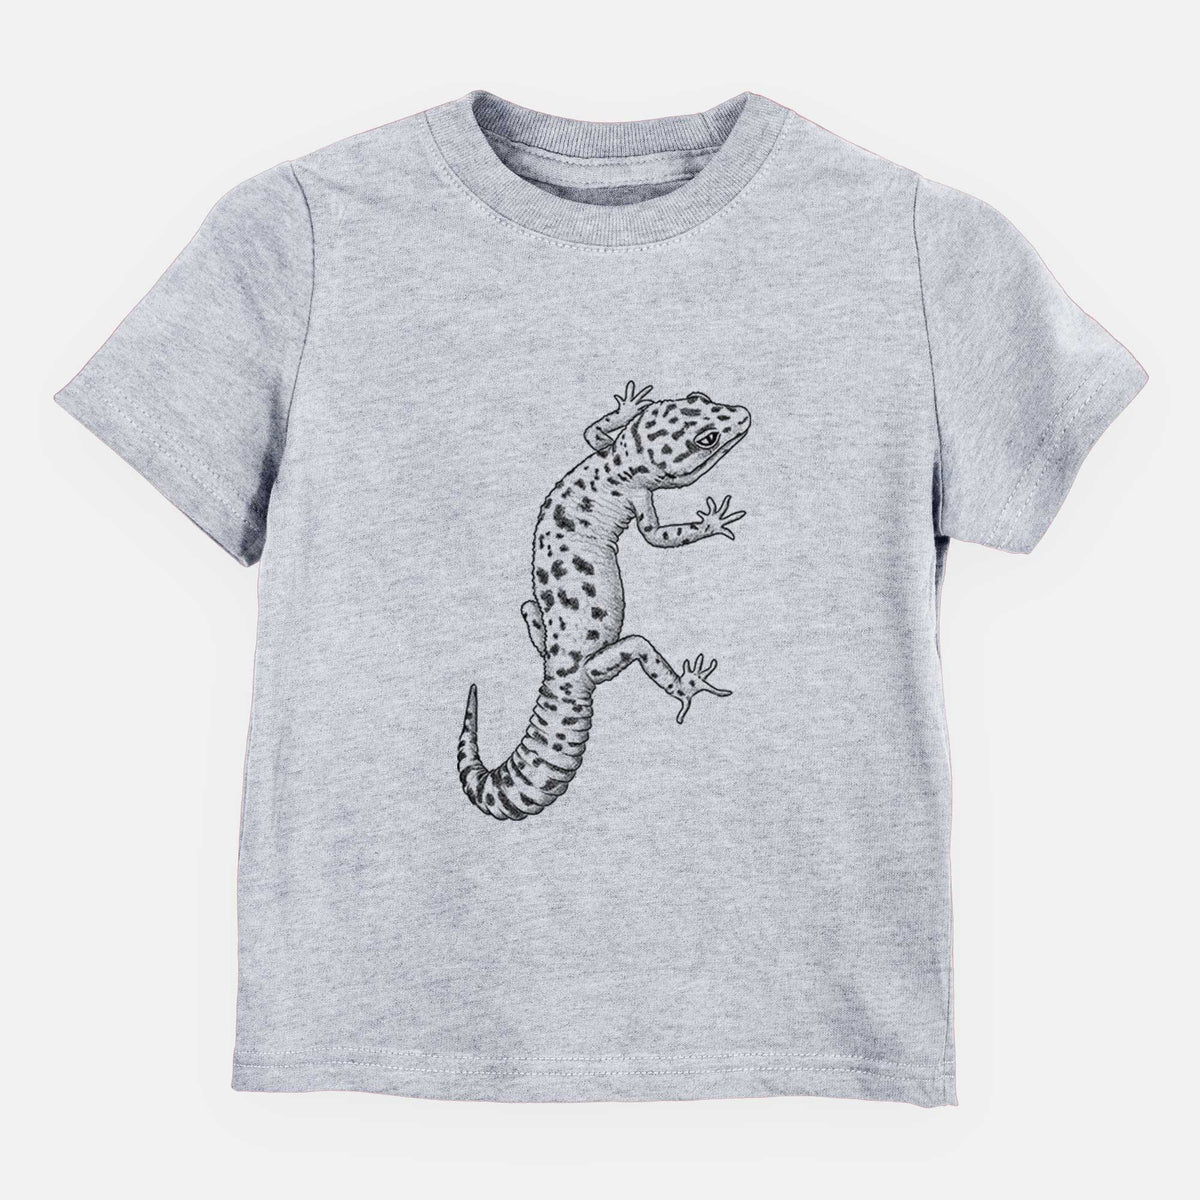 Eublepharis macularius - Leopard Gecko - Kids Shirt